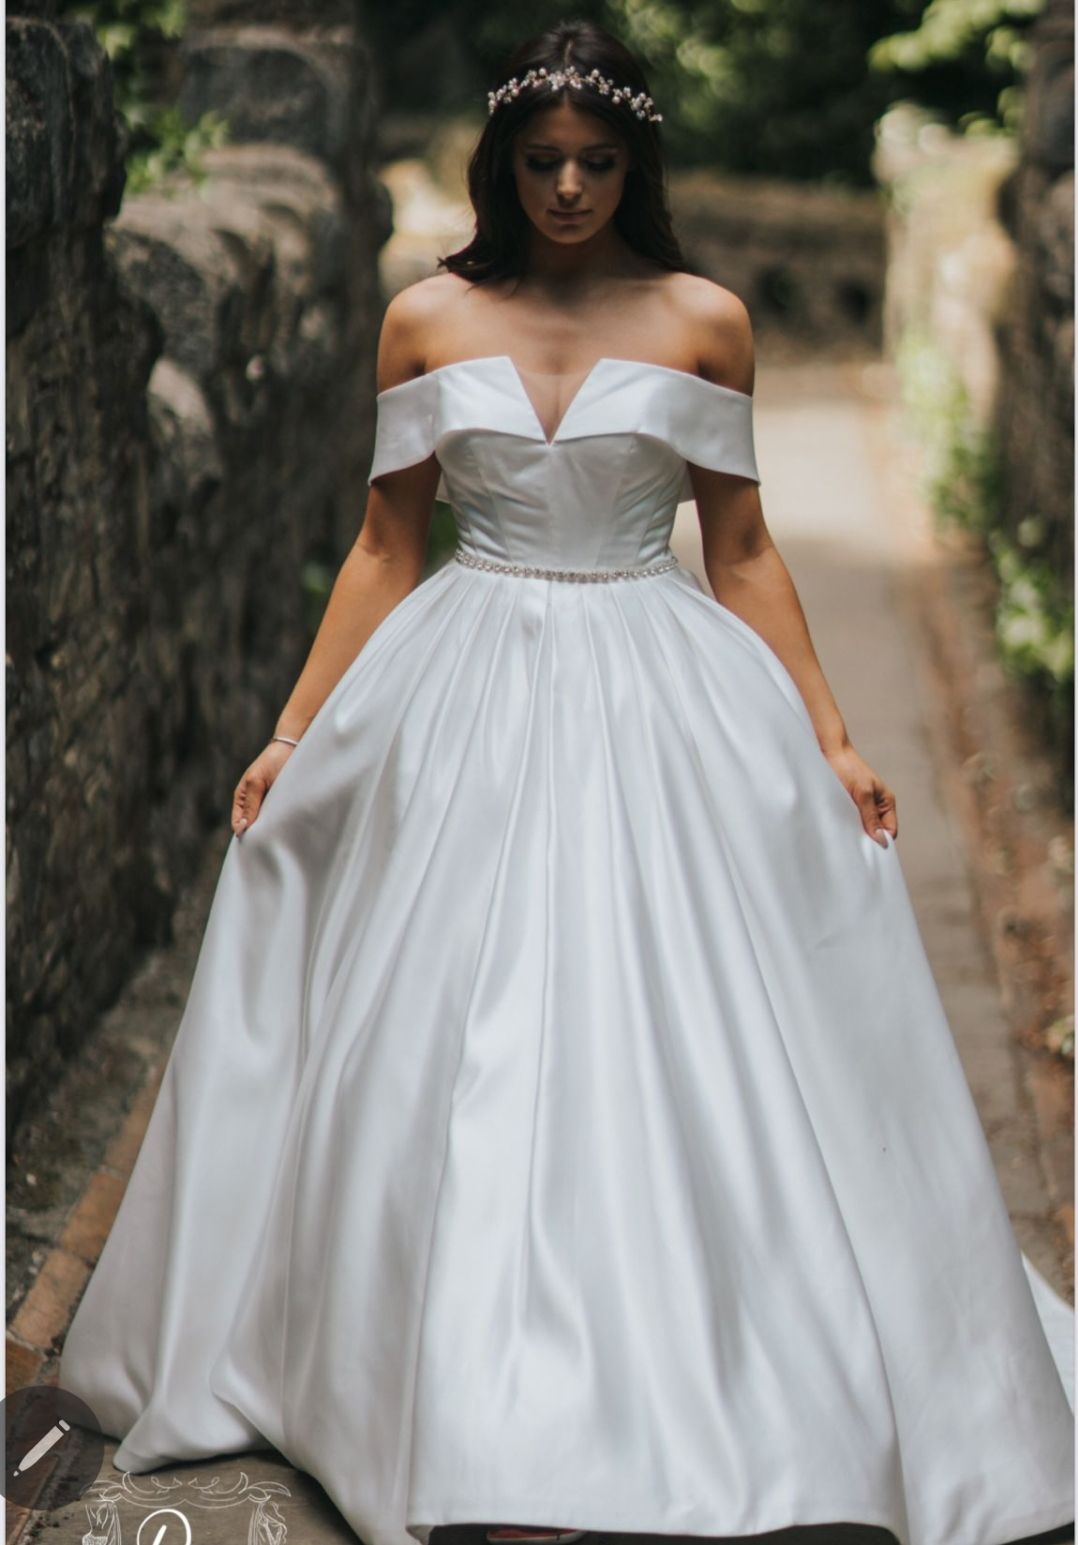 Best Dress 2 Impress Bridal-Image-56